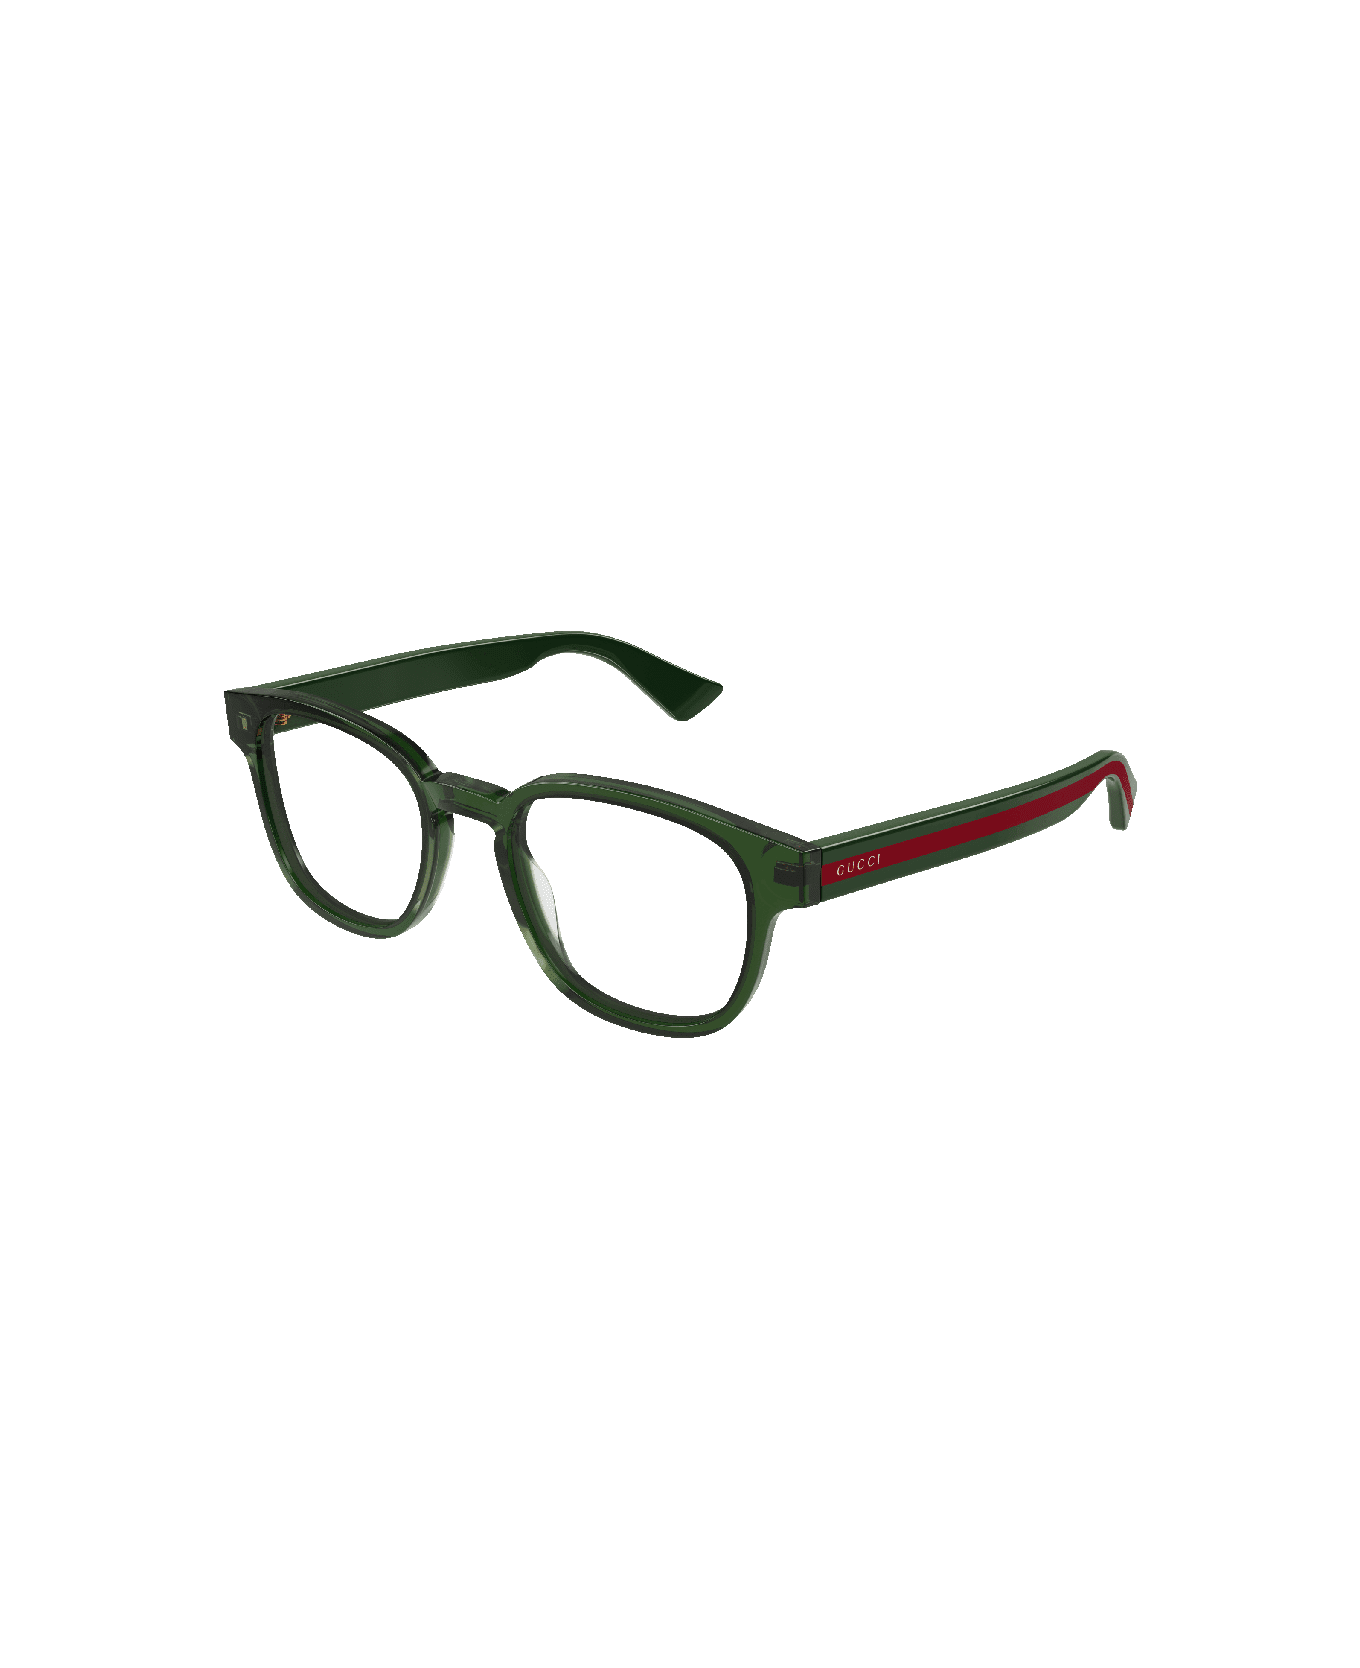 Gucci Eyewear GG0927 Glasses - Verde